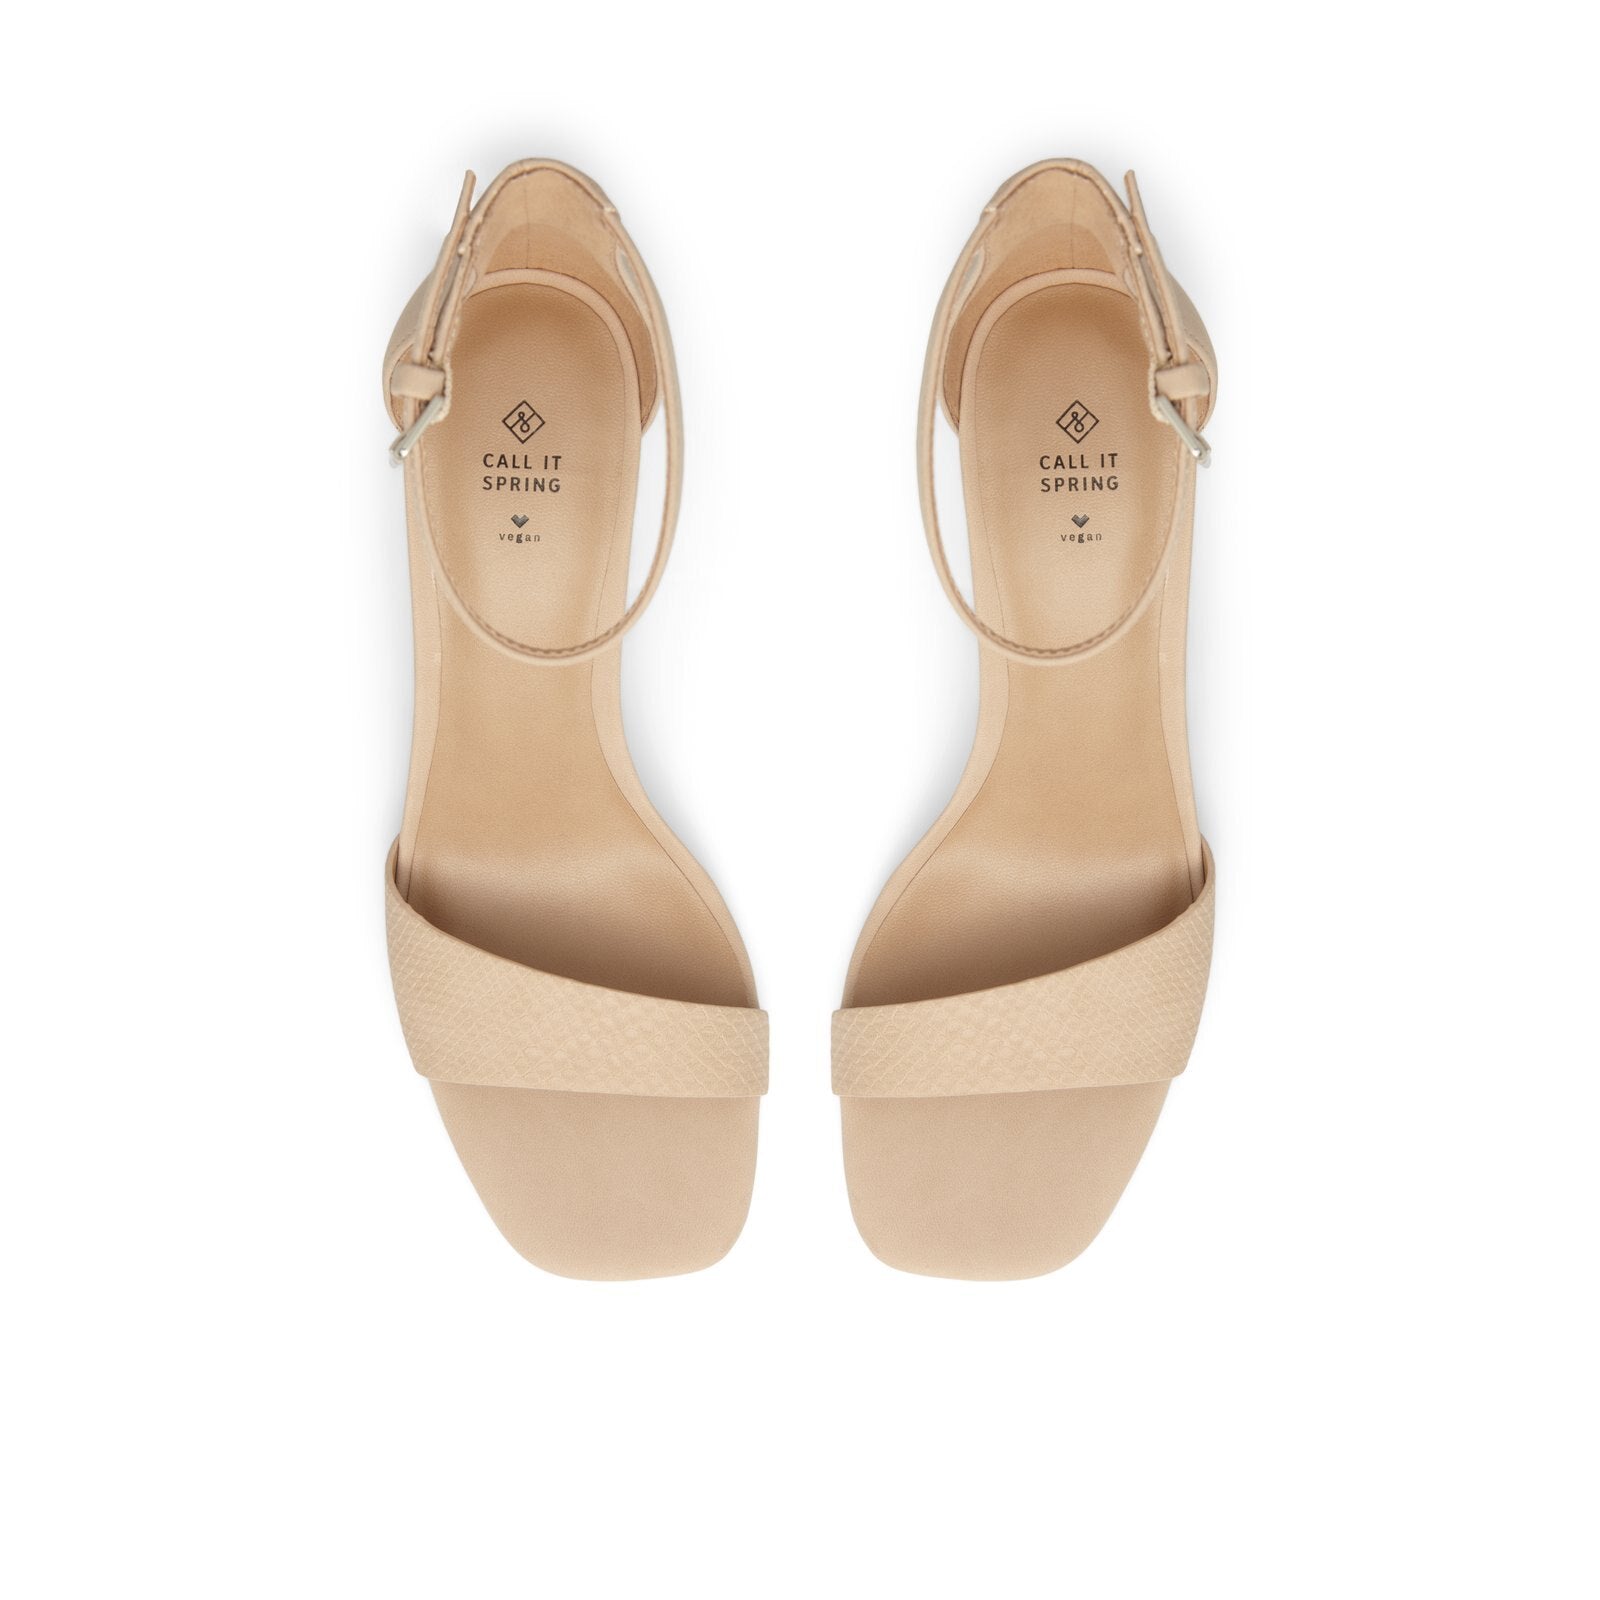 OLLILLE Women Shoes - MEDIUM BEIGE - CALL IT SPRING KSA